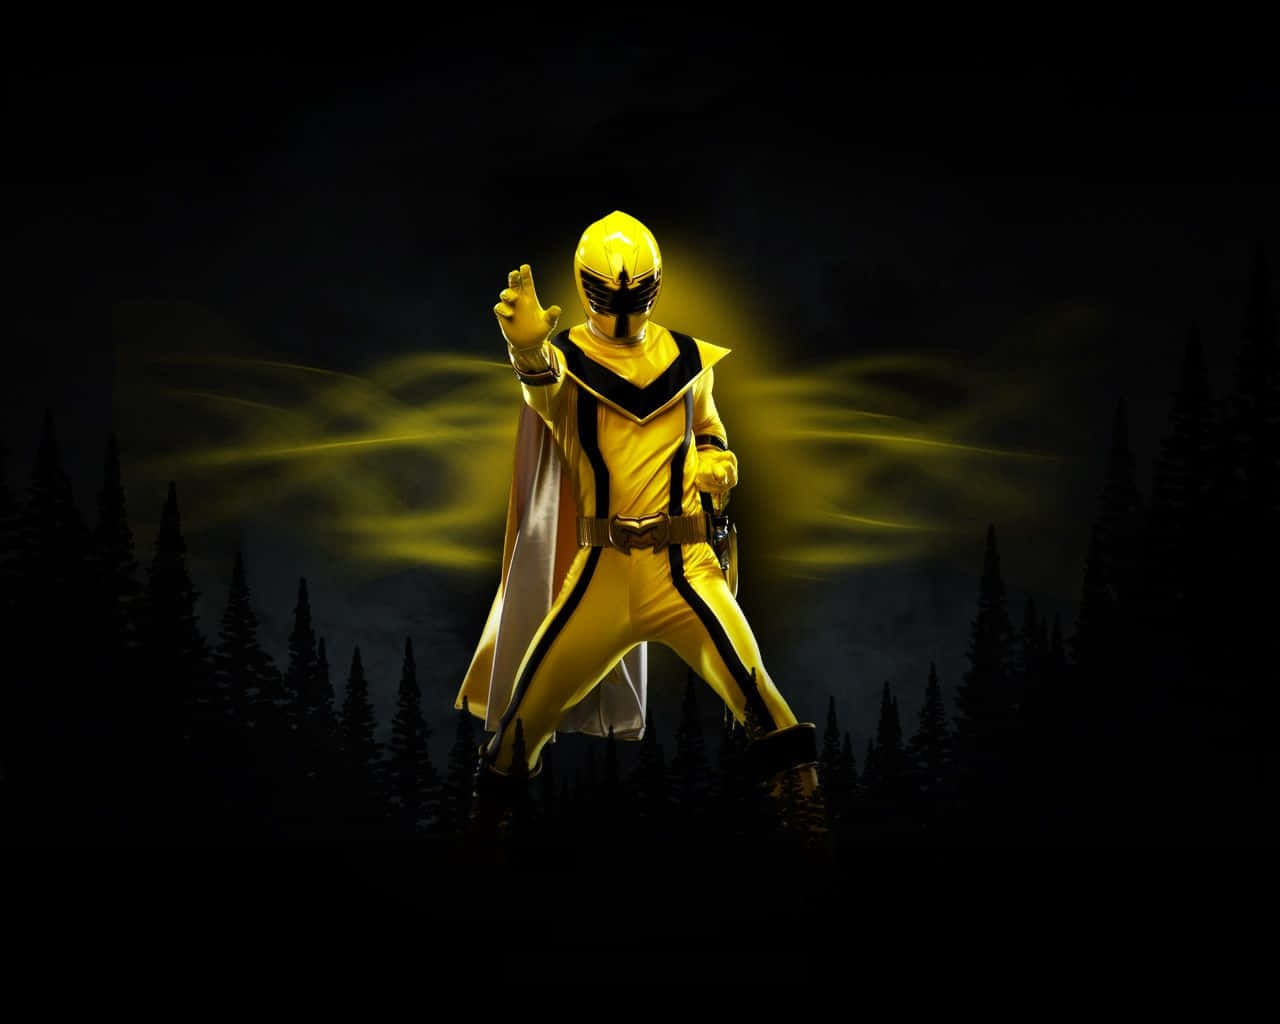 Yellow Ranger Power Pose Dark Background Wallpaper